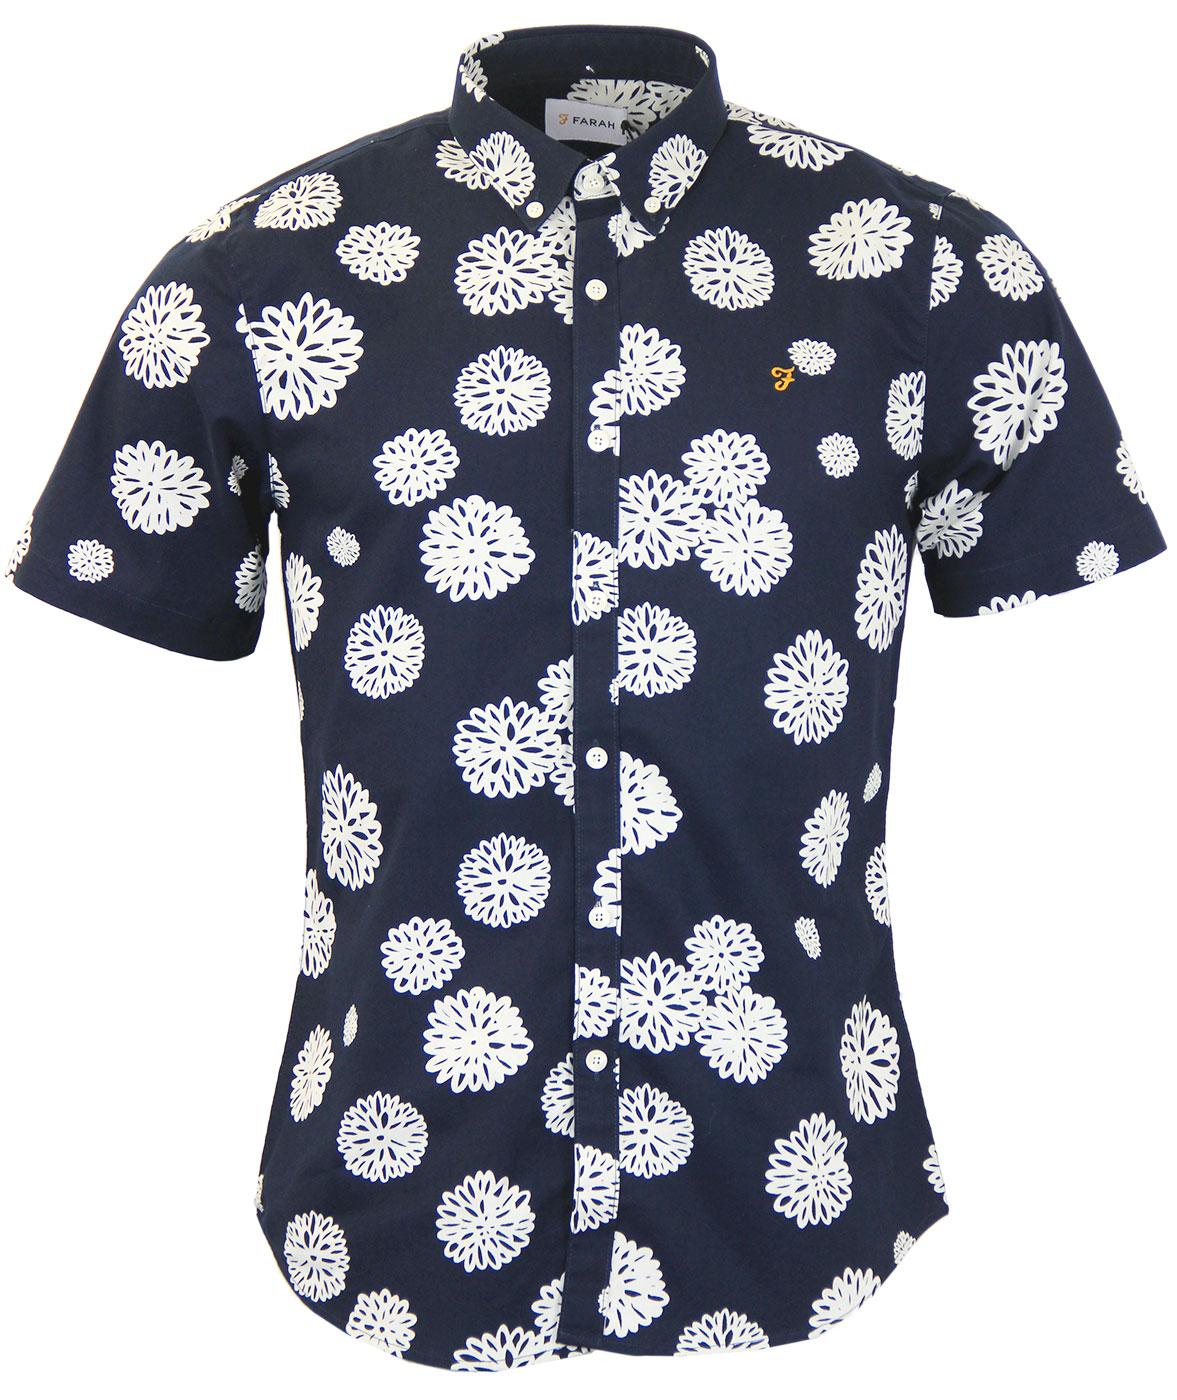 Emmett FARAH Retro Mod Floral Print Slim SS Shirt